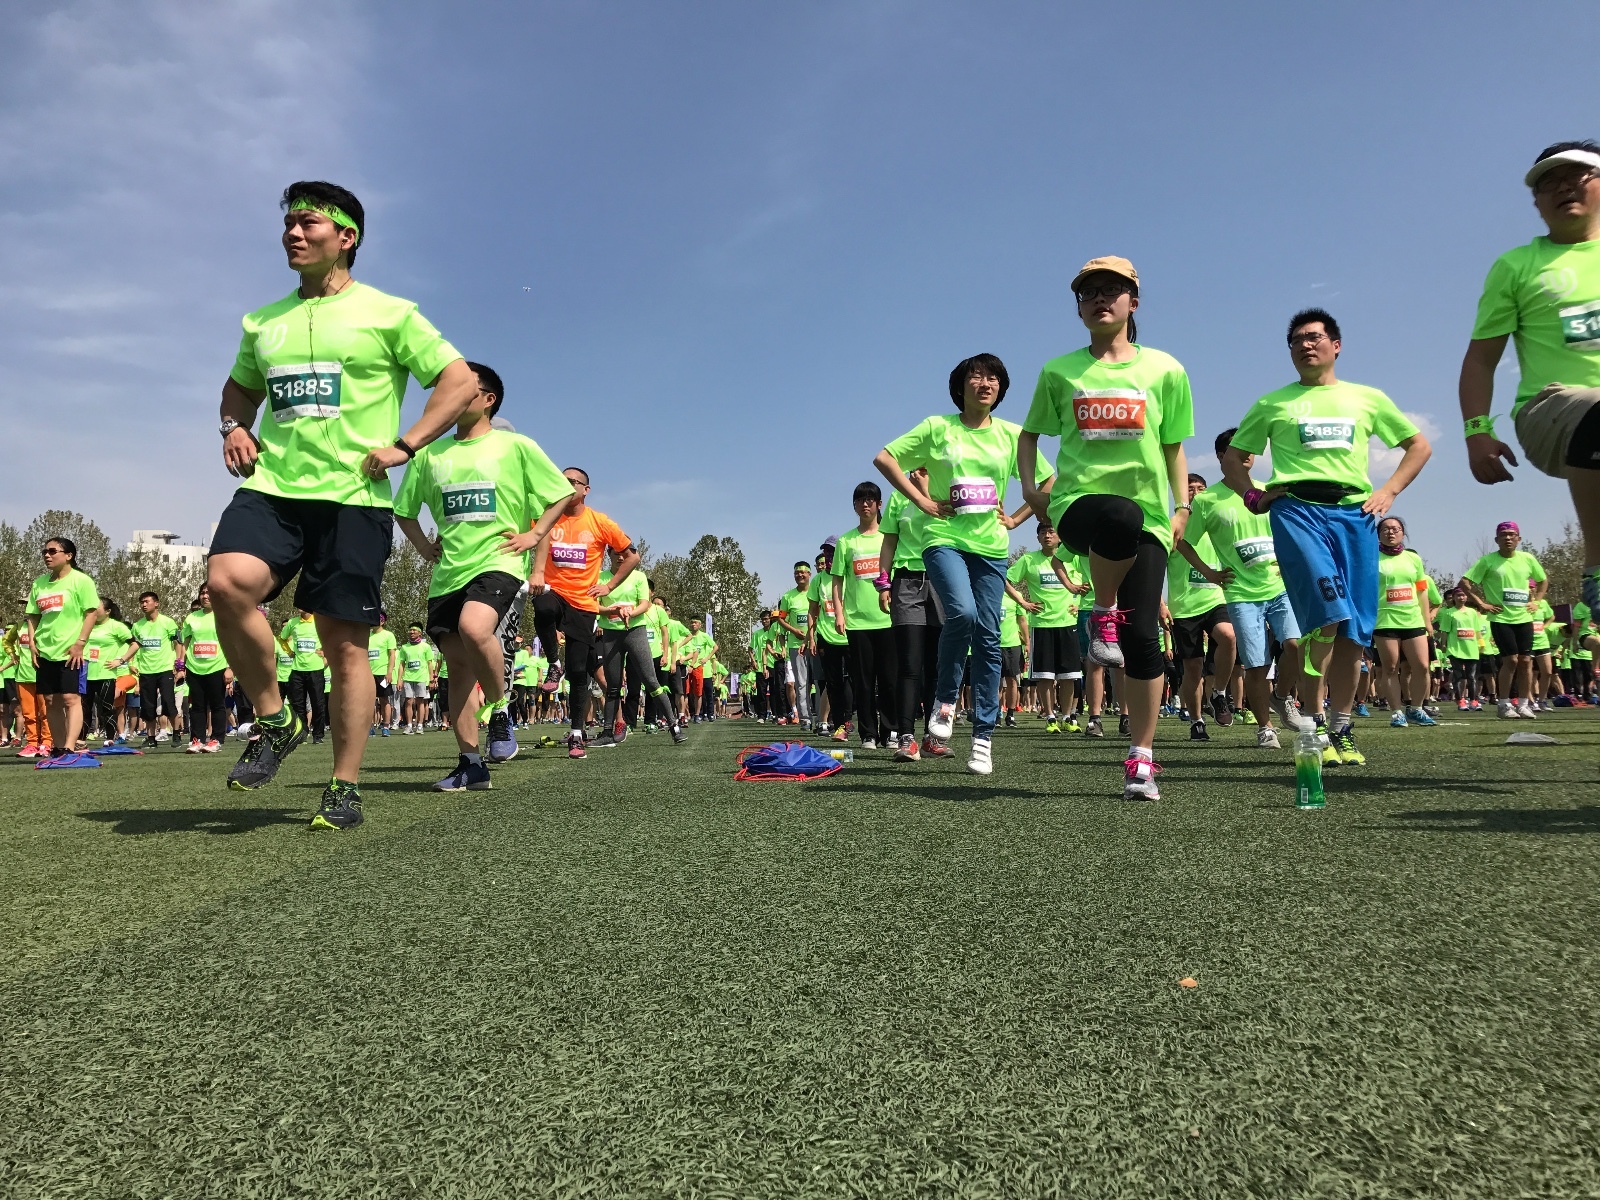 U-run2017清华校马开跑 4000名师生长跑为母